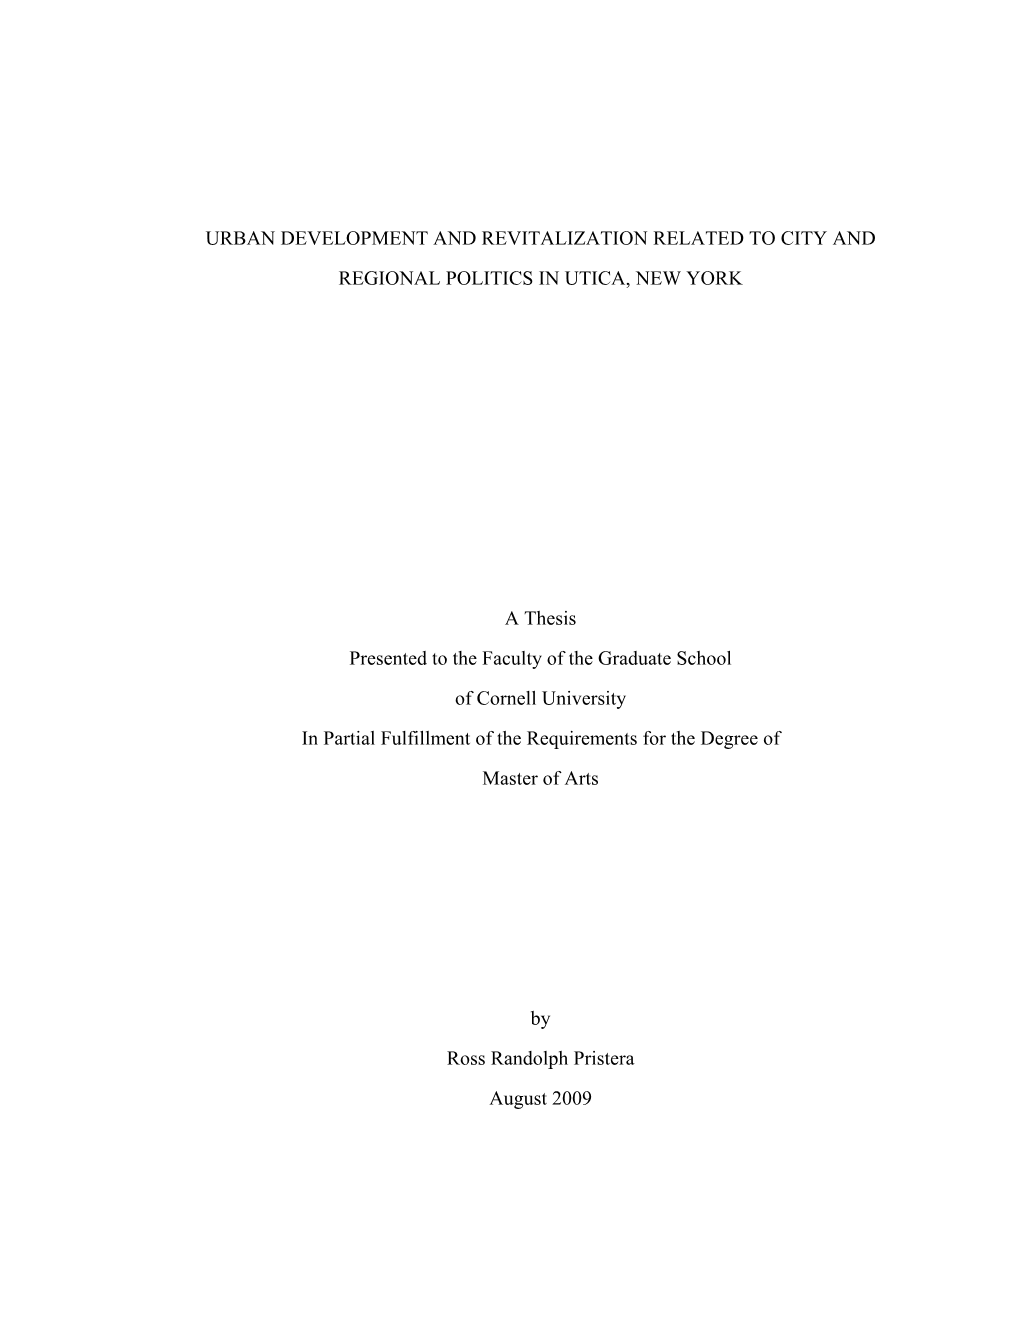 Urban Development & Revitalization Related to City & Regional Politics in Utica, New York